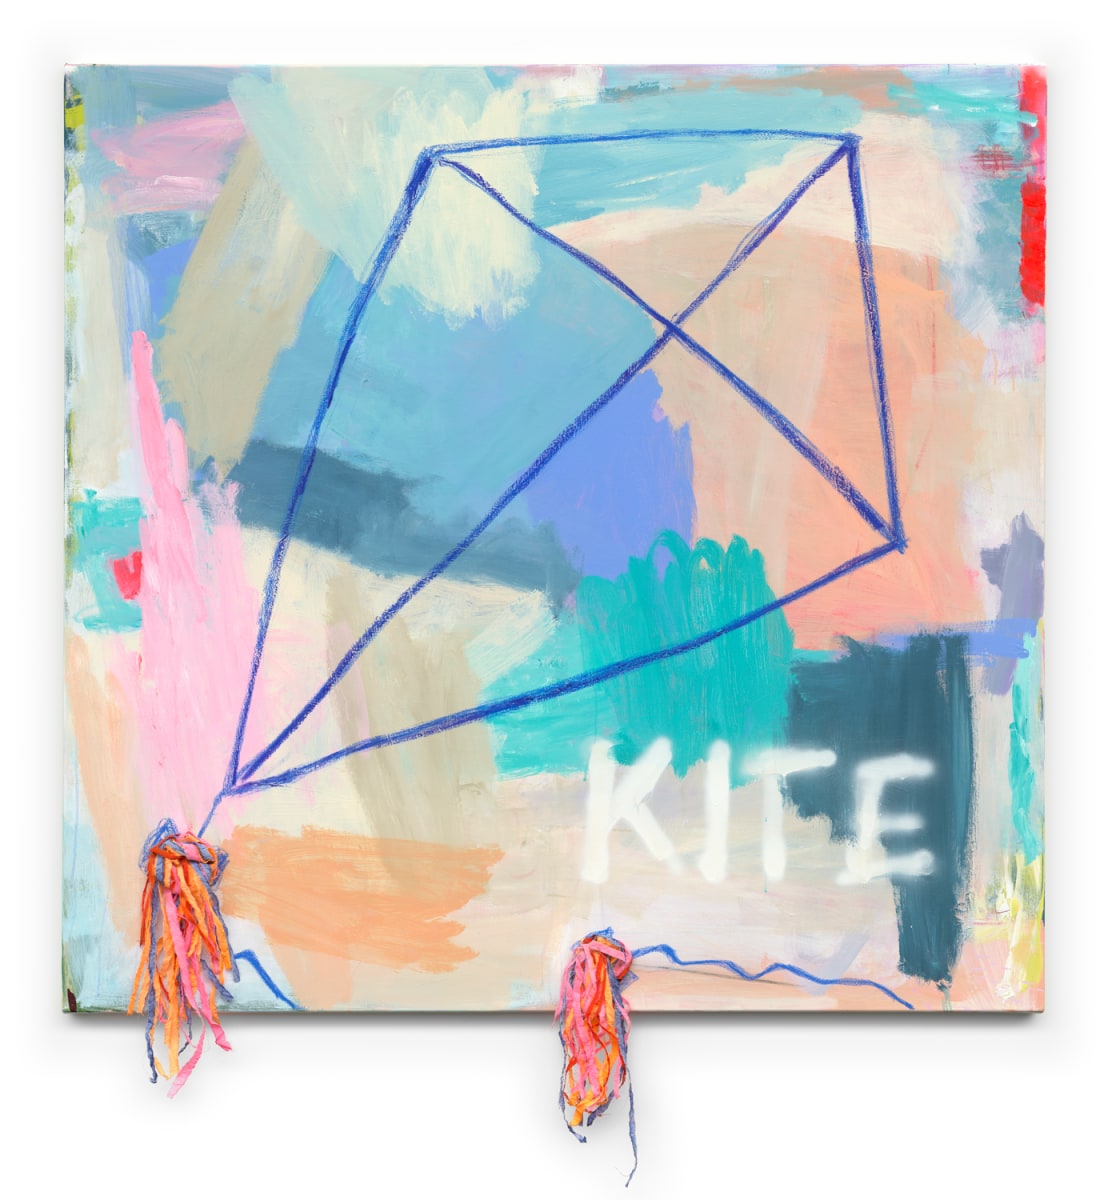 Kite by Marisabel Gonzalez  